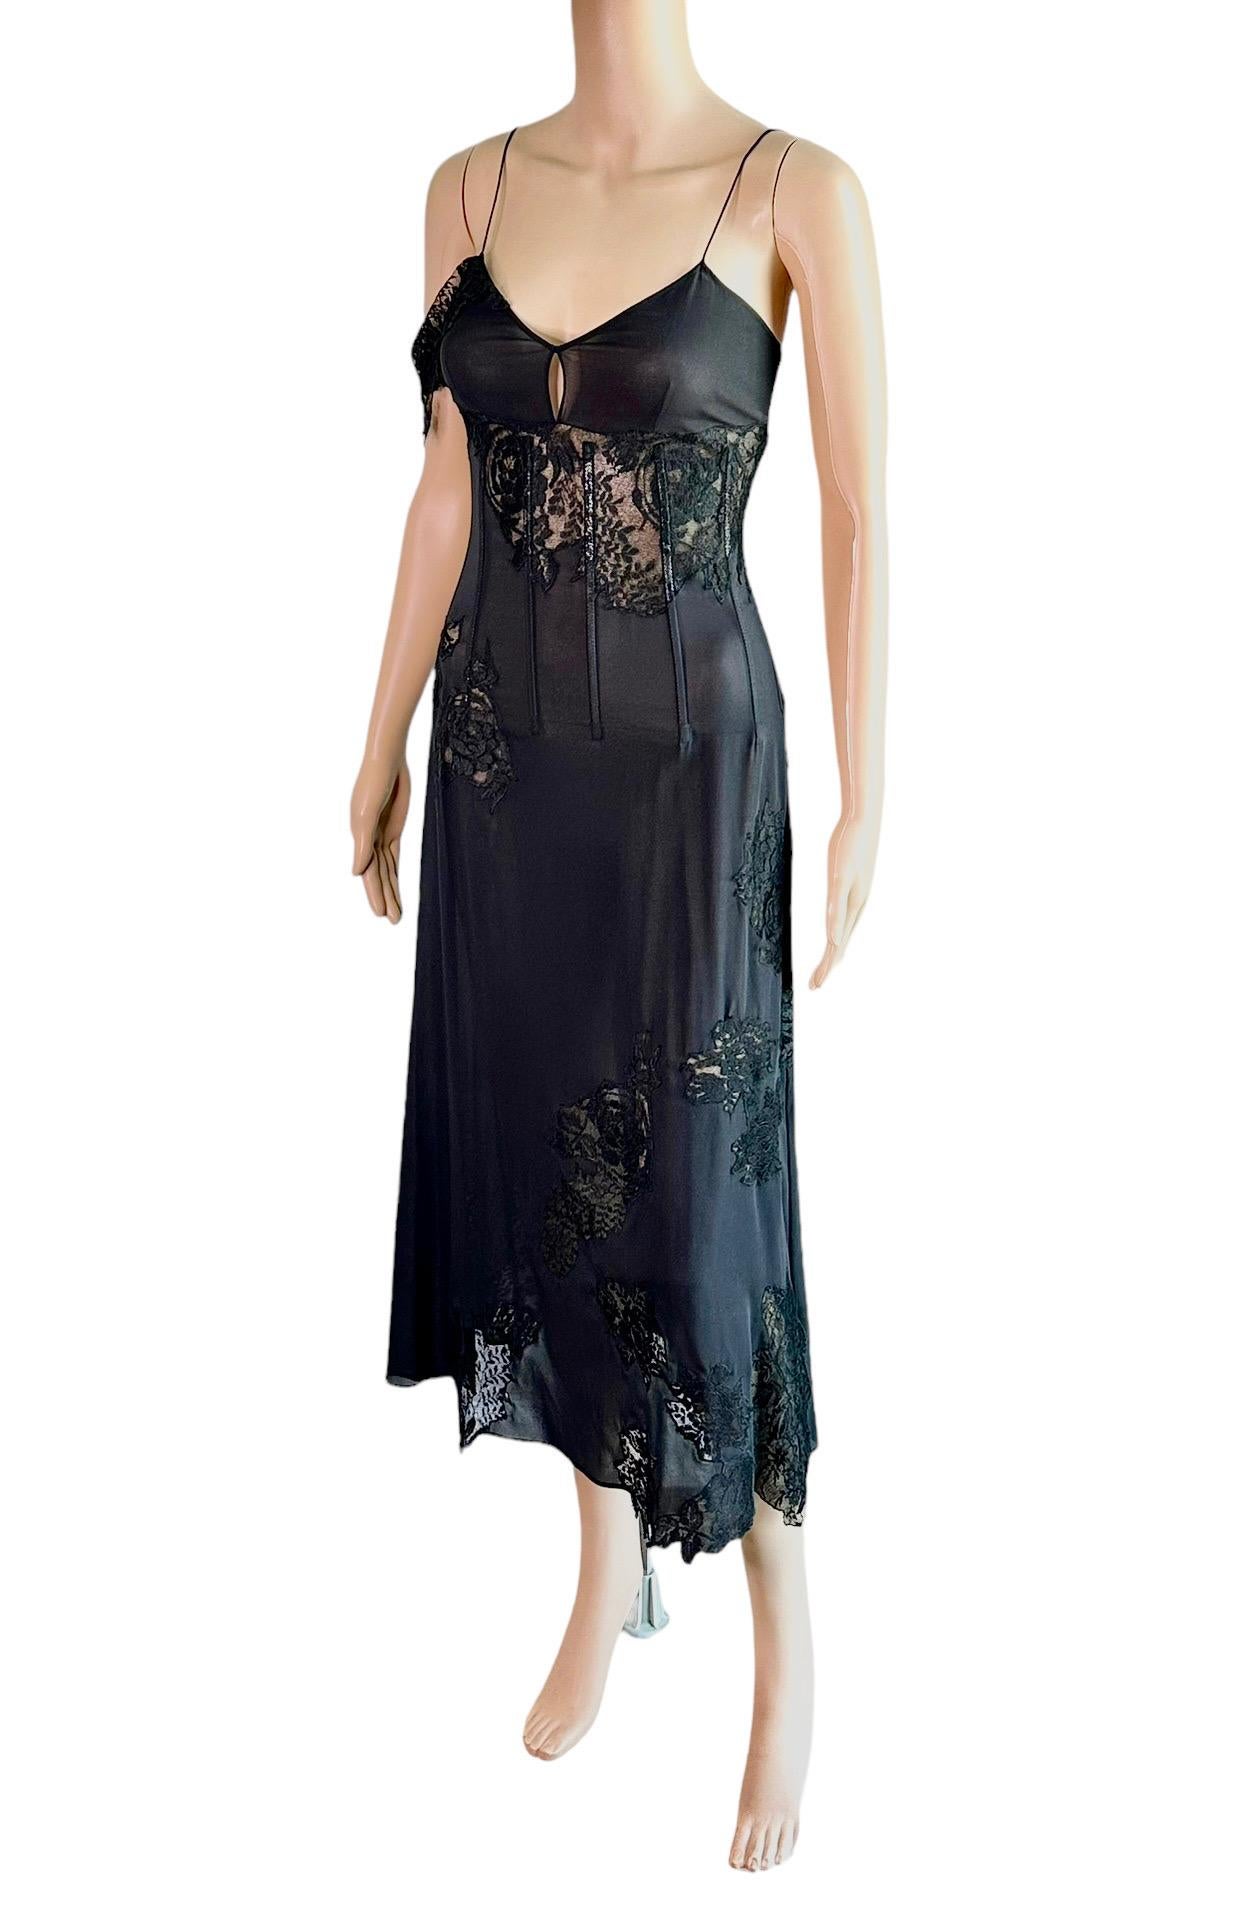 Dolce & Gabbana S/S 2002 Runway Unworn Sheer Lace Corset Black Midi Dress For Sale 4